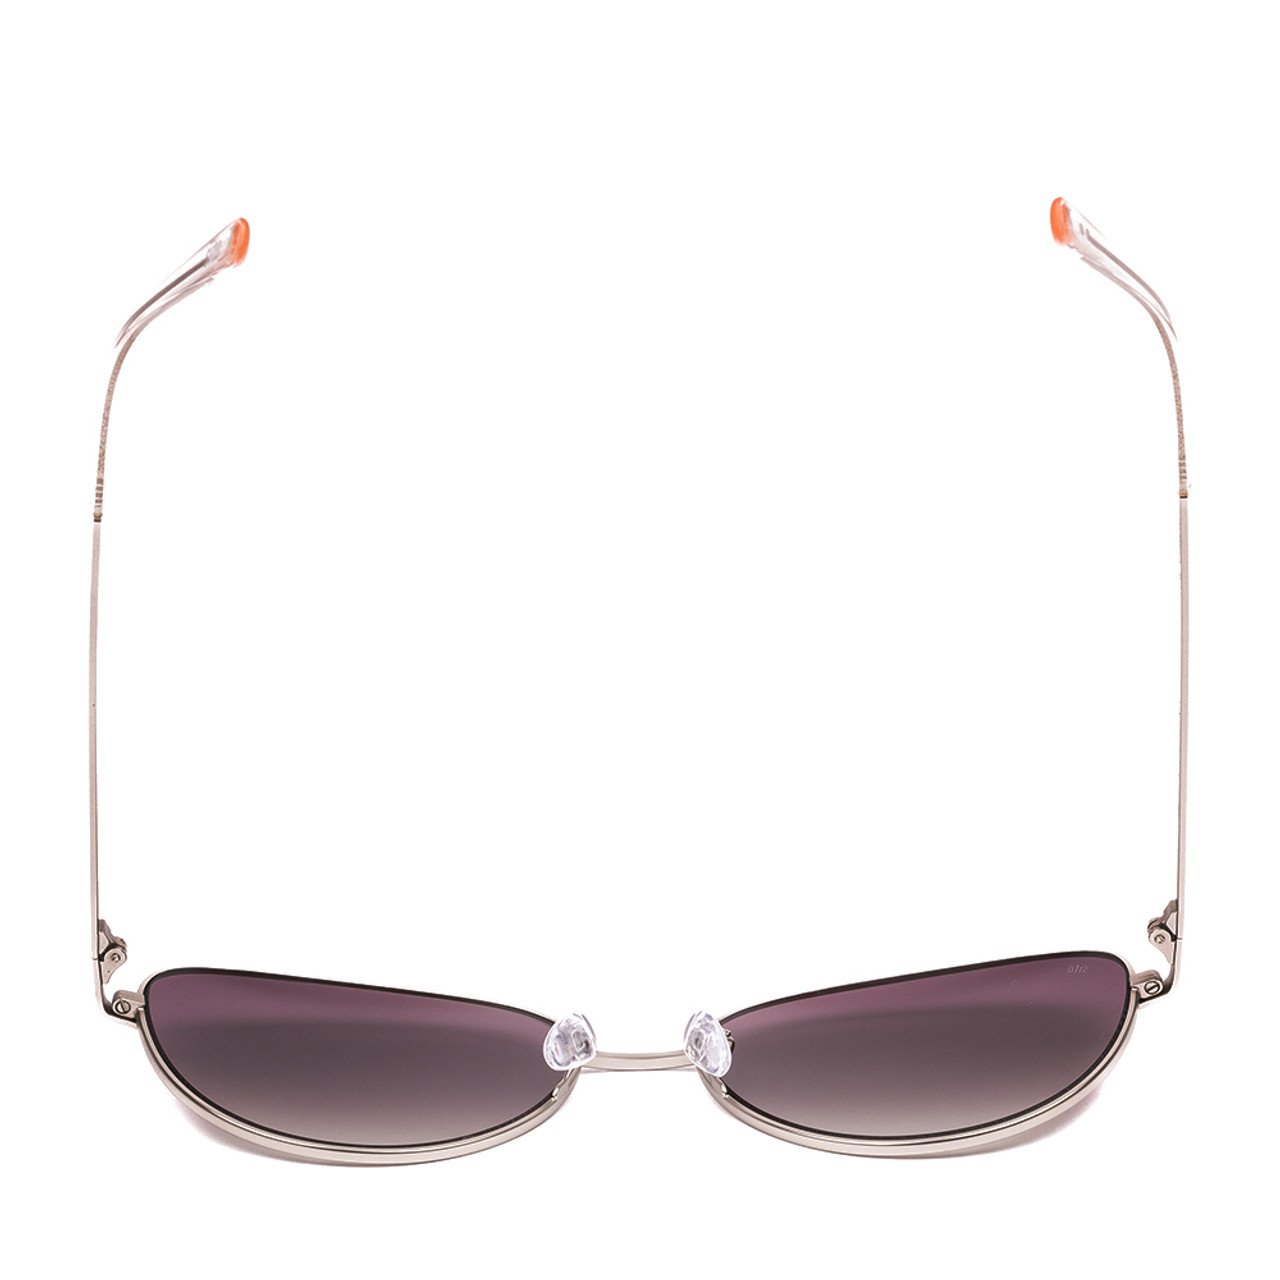 Top View of SITO SHADES CANDI Womens Pilot Designer Sunglasses Silver/Quartz Gradient 59mm